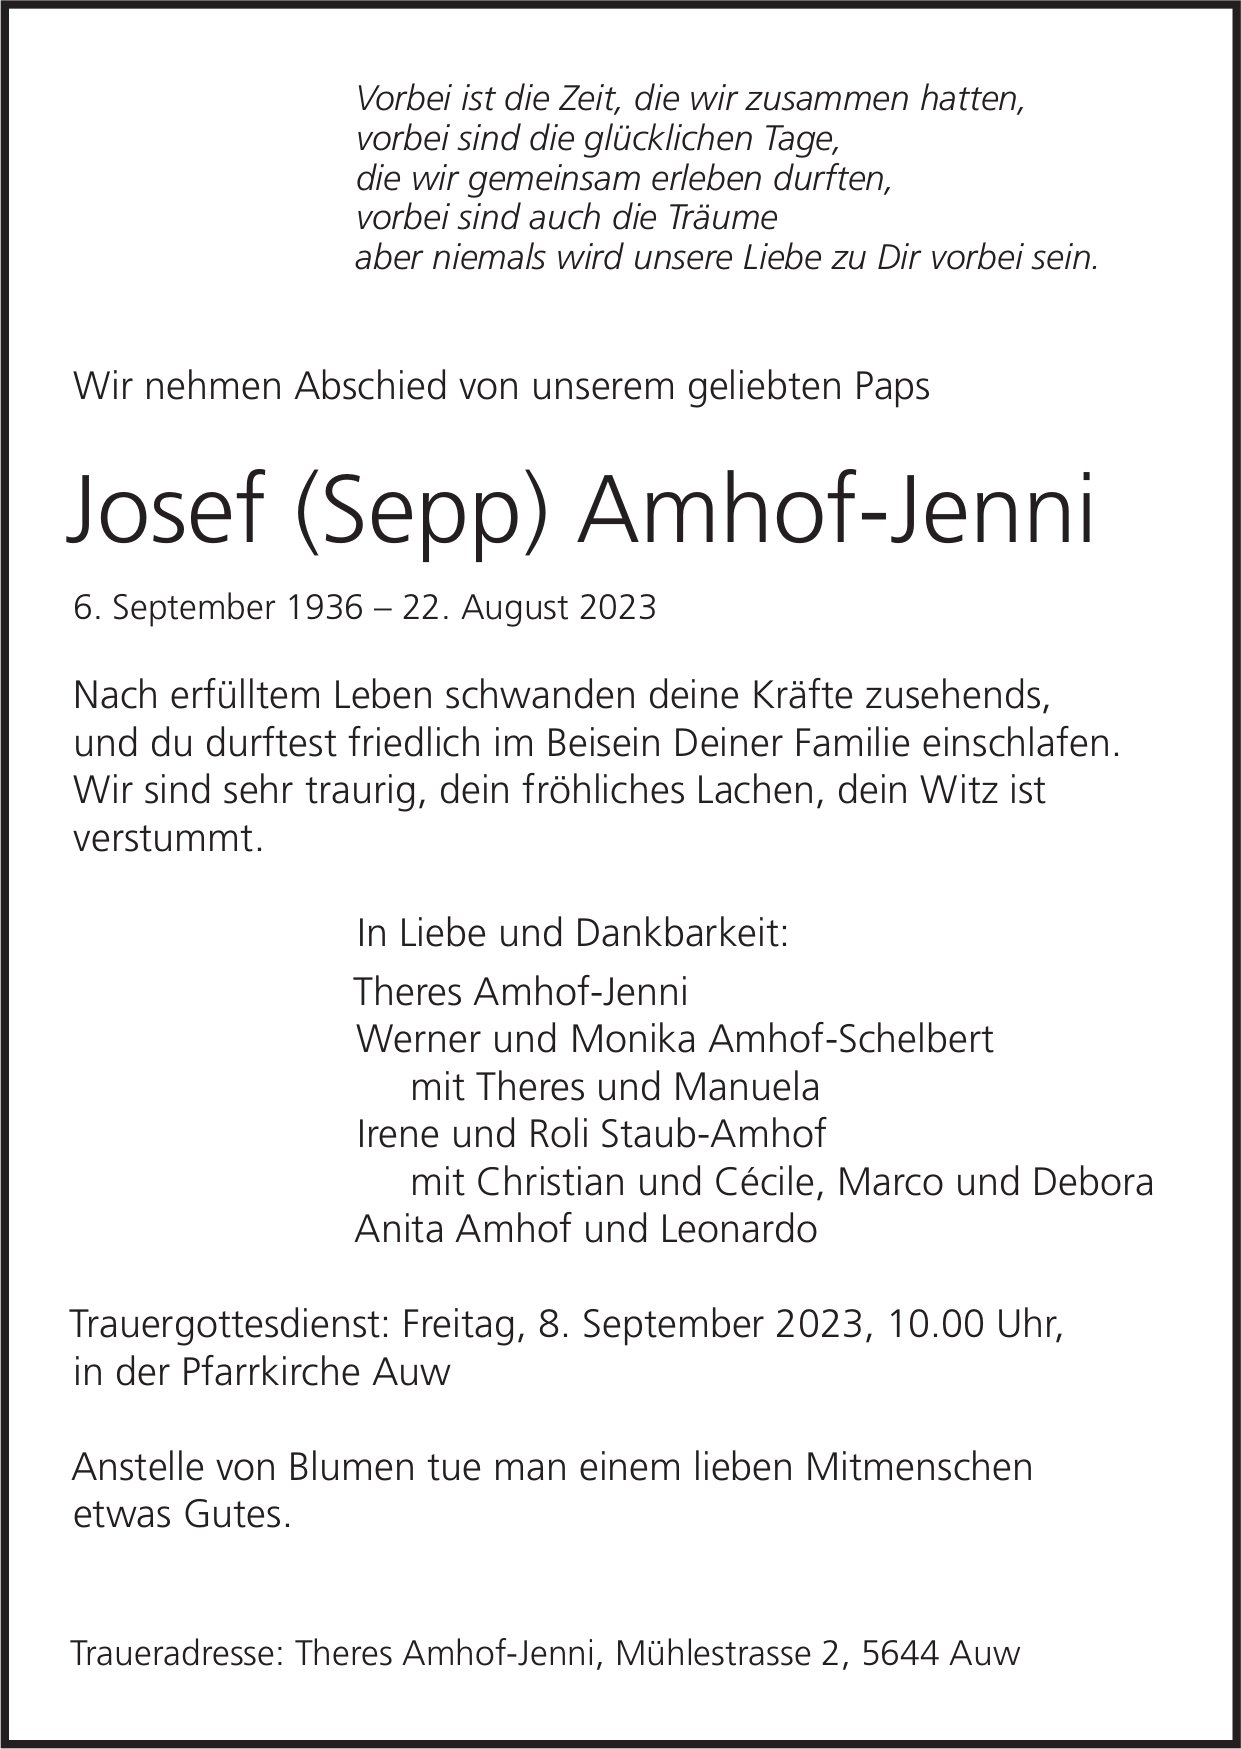 Amhof-Jenni Josef (Sepp), August 2023 / TA